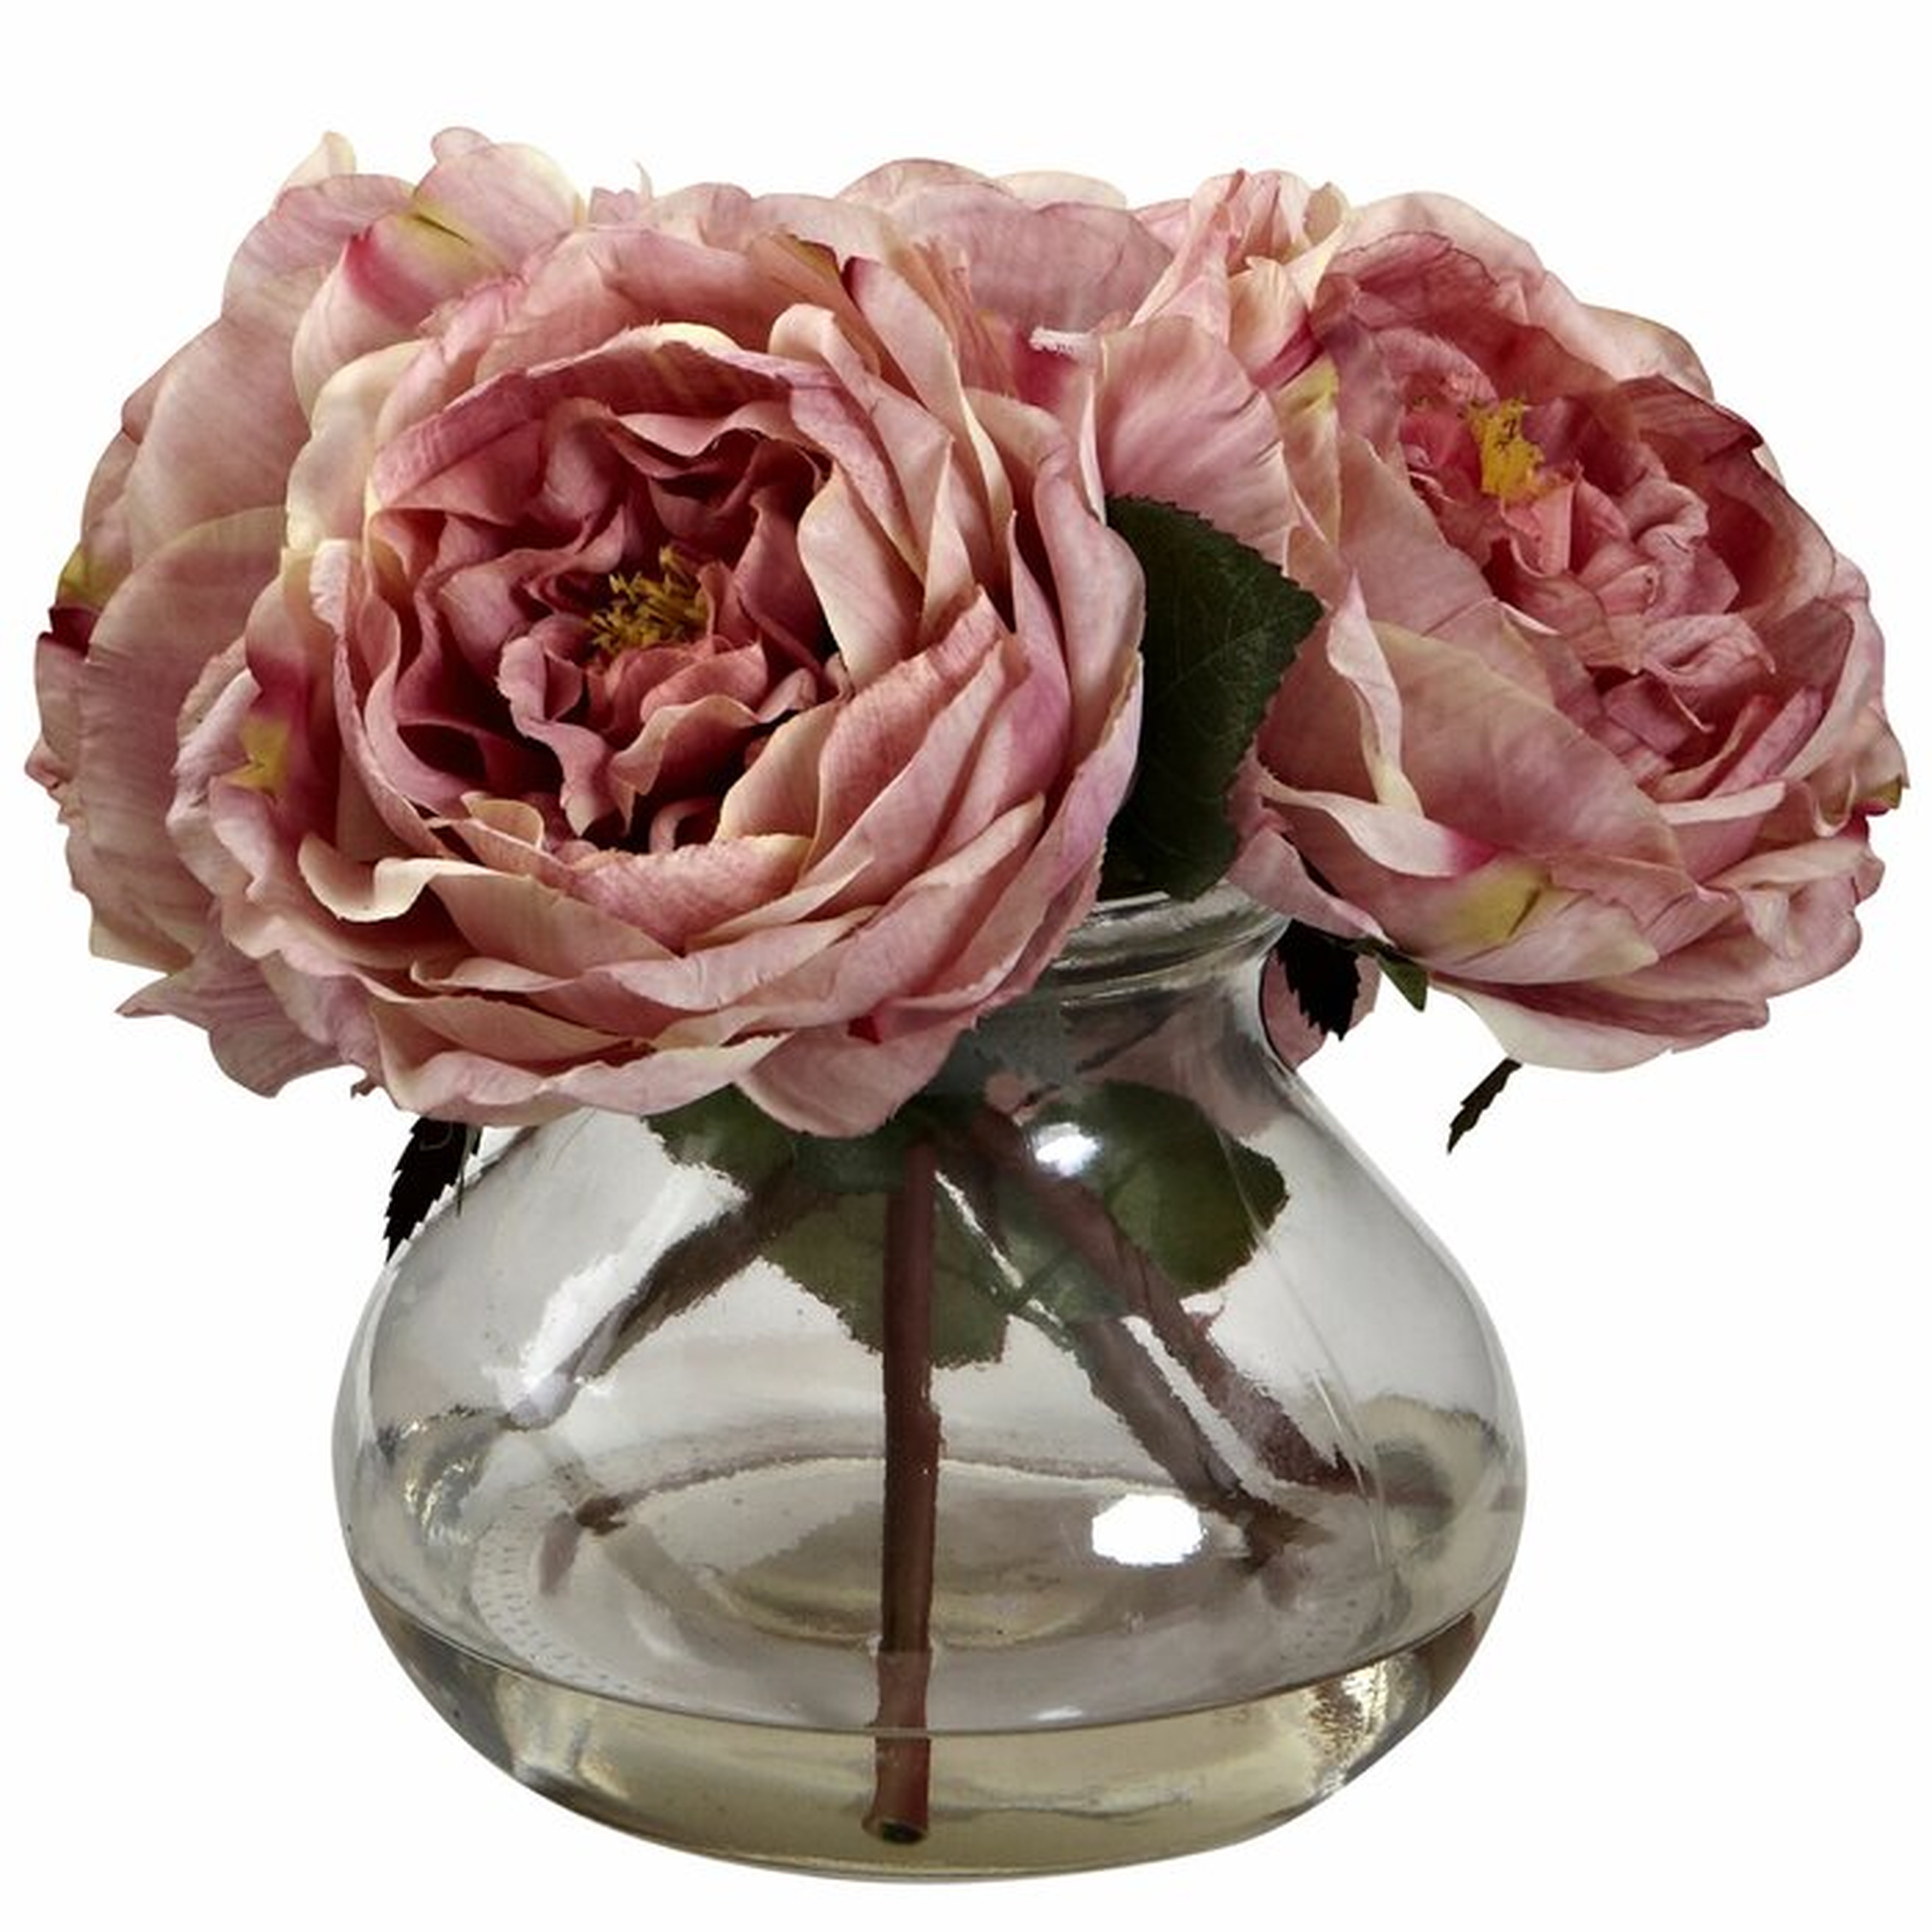 Fancy Roses Centerpiece in Vase - Birch Lane